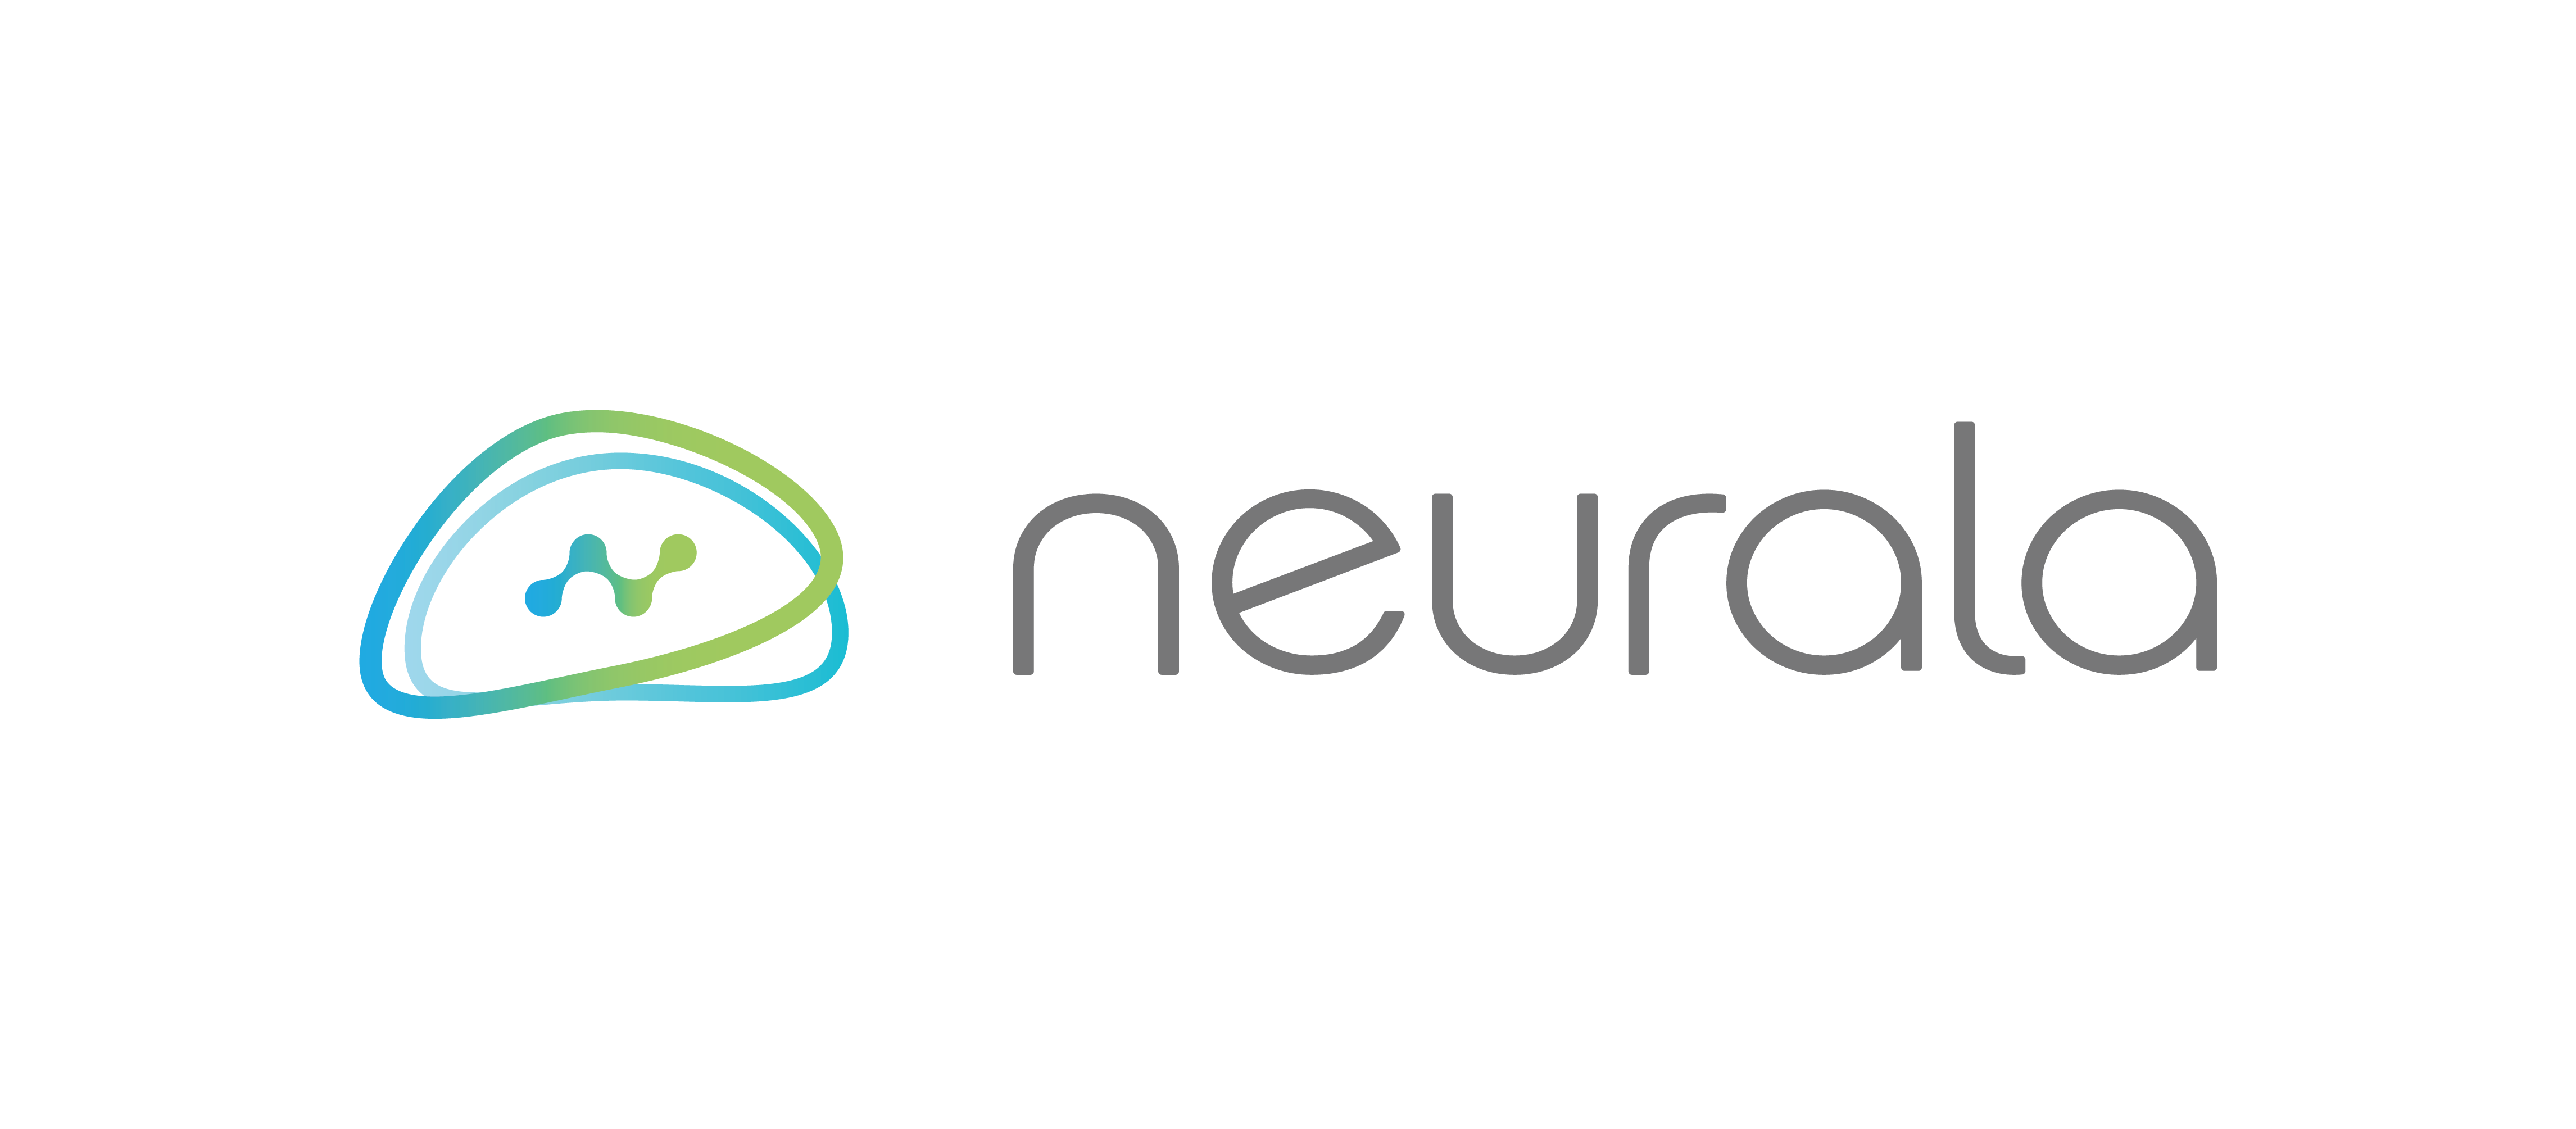 Neurala Logo 2020